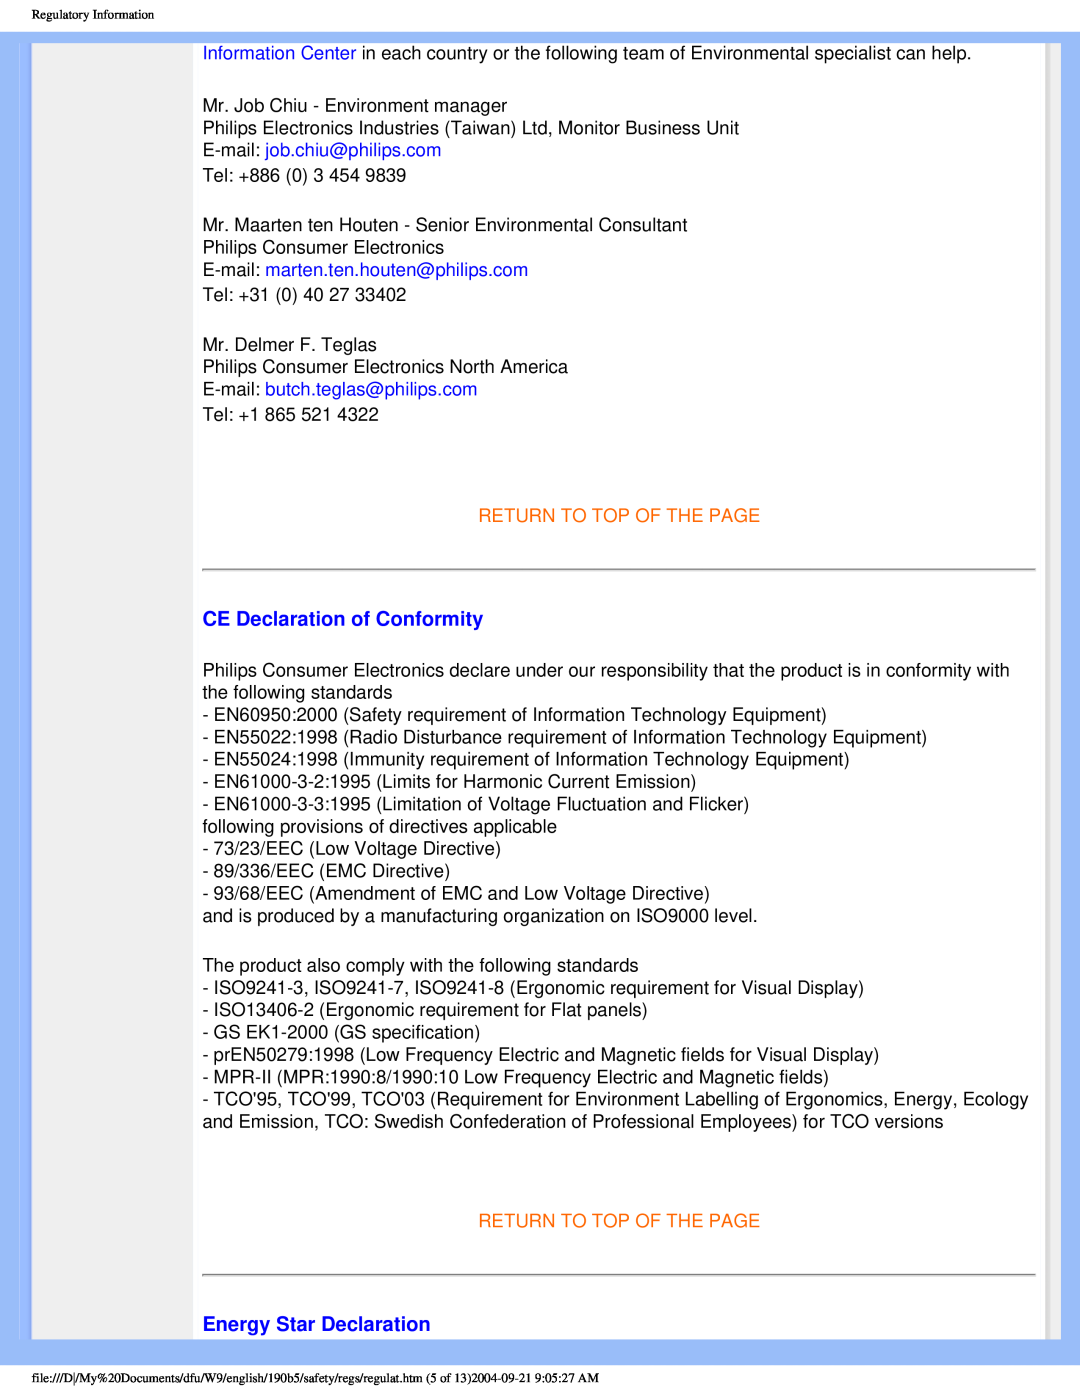 Philips 190b5 user manual CE Declaration of Conformity, Energy Star Declaration, E-mail job.chiu@philips.com 